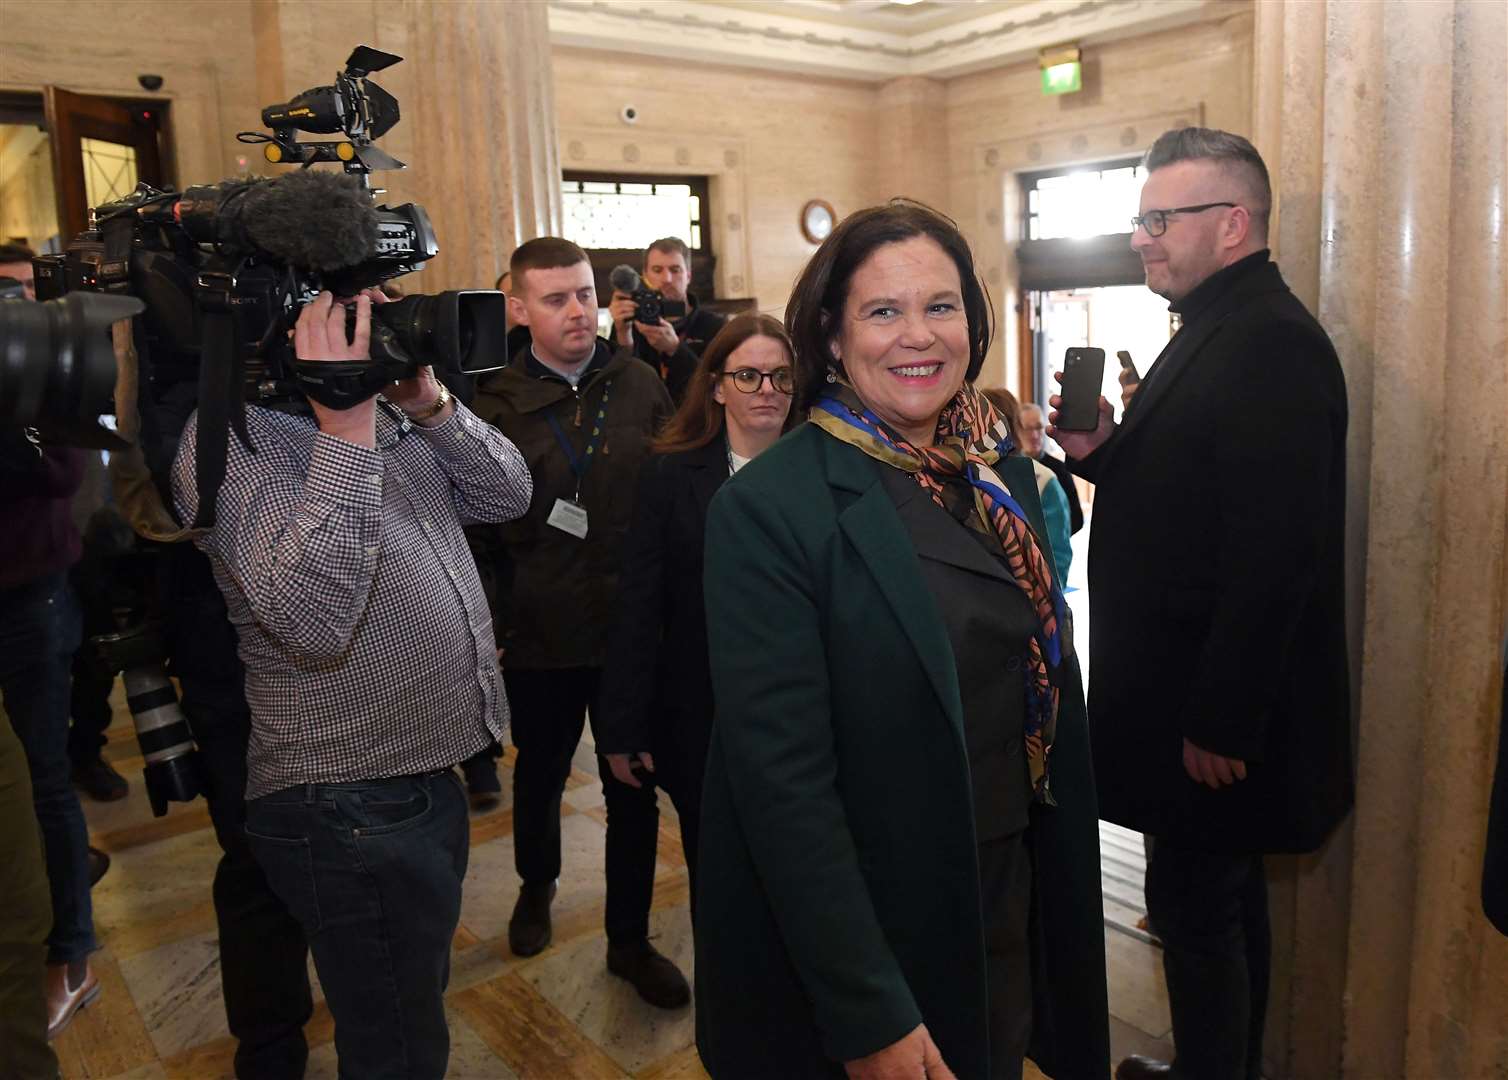 Sinn Fein President Mary Lou McDonald arriving at Parliament Buildings (Oliver McVeigh/PA)